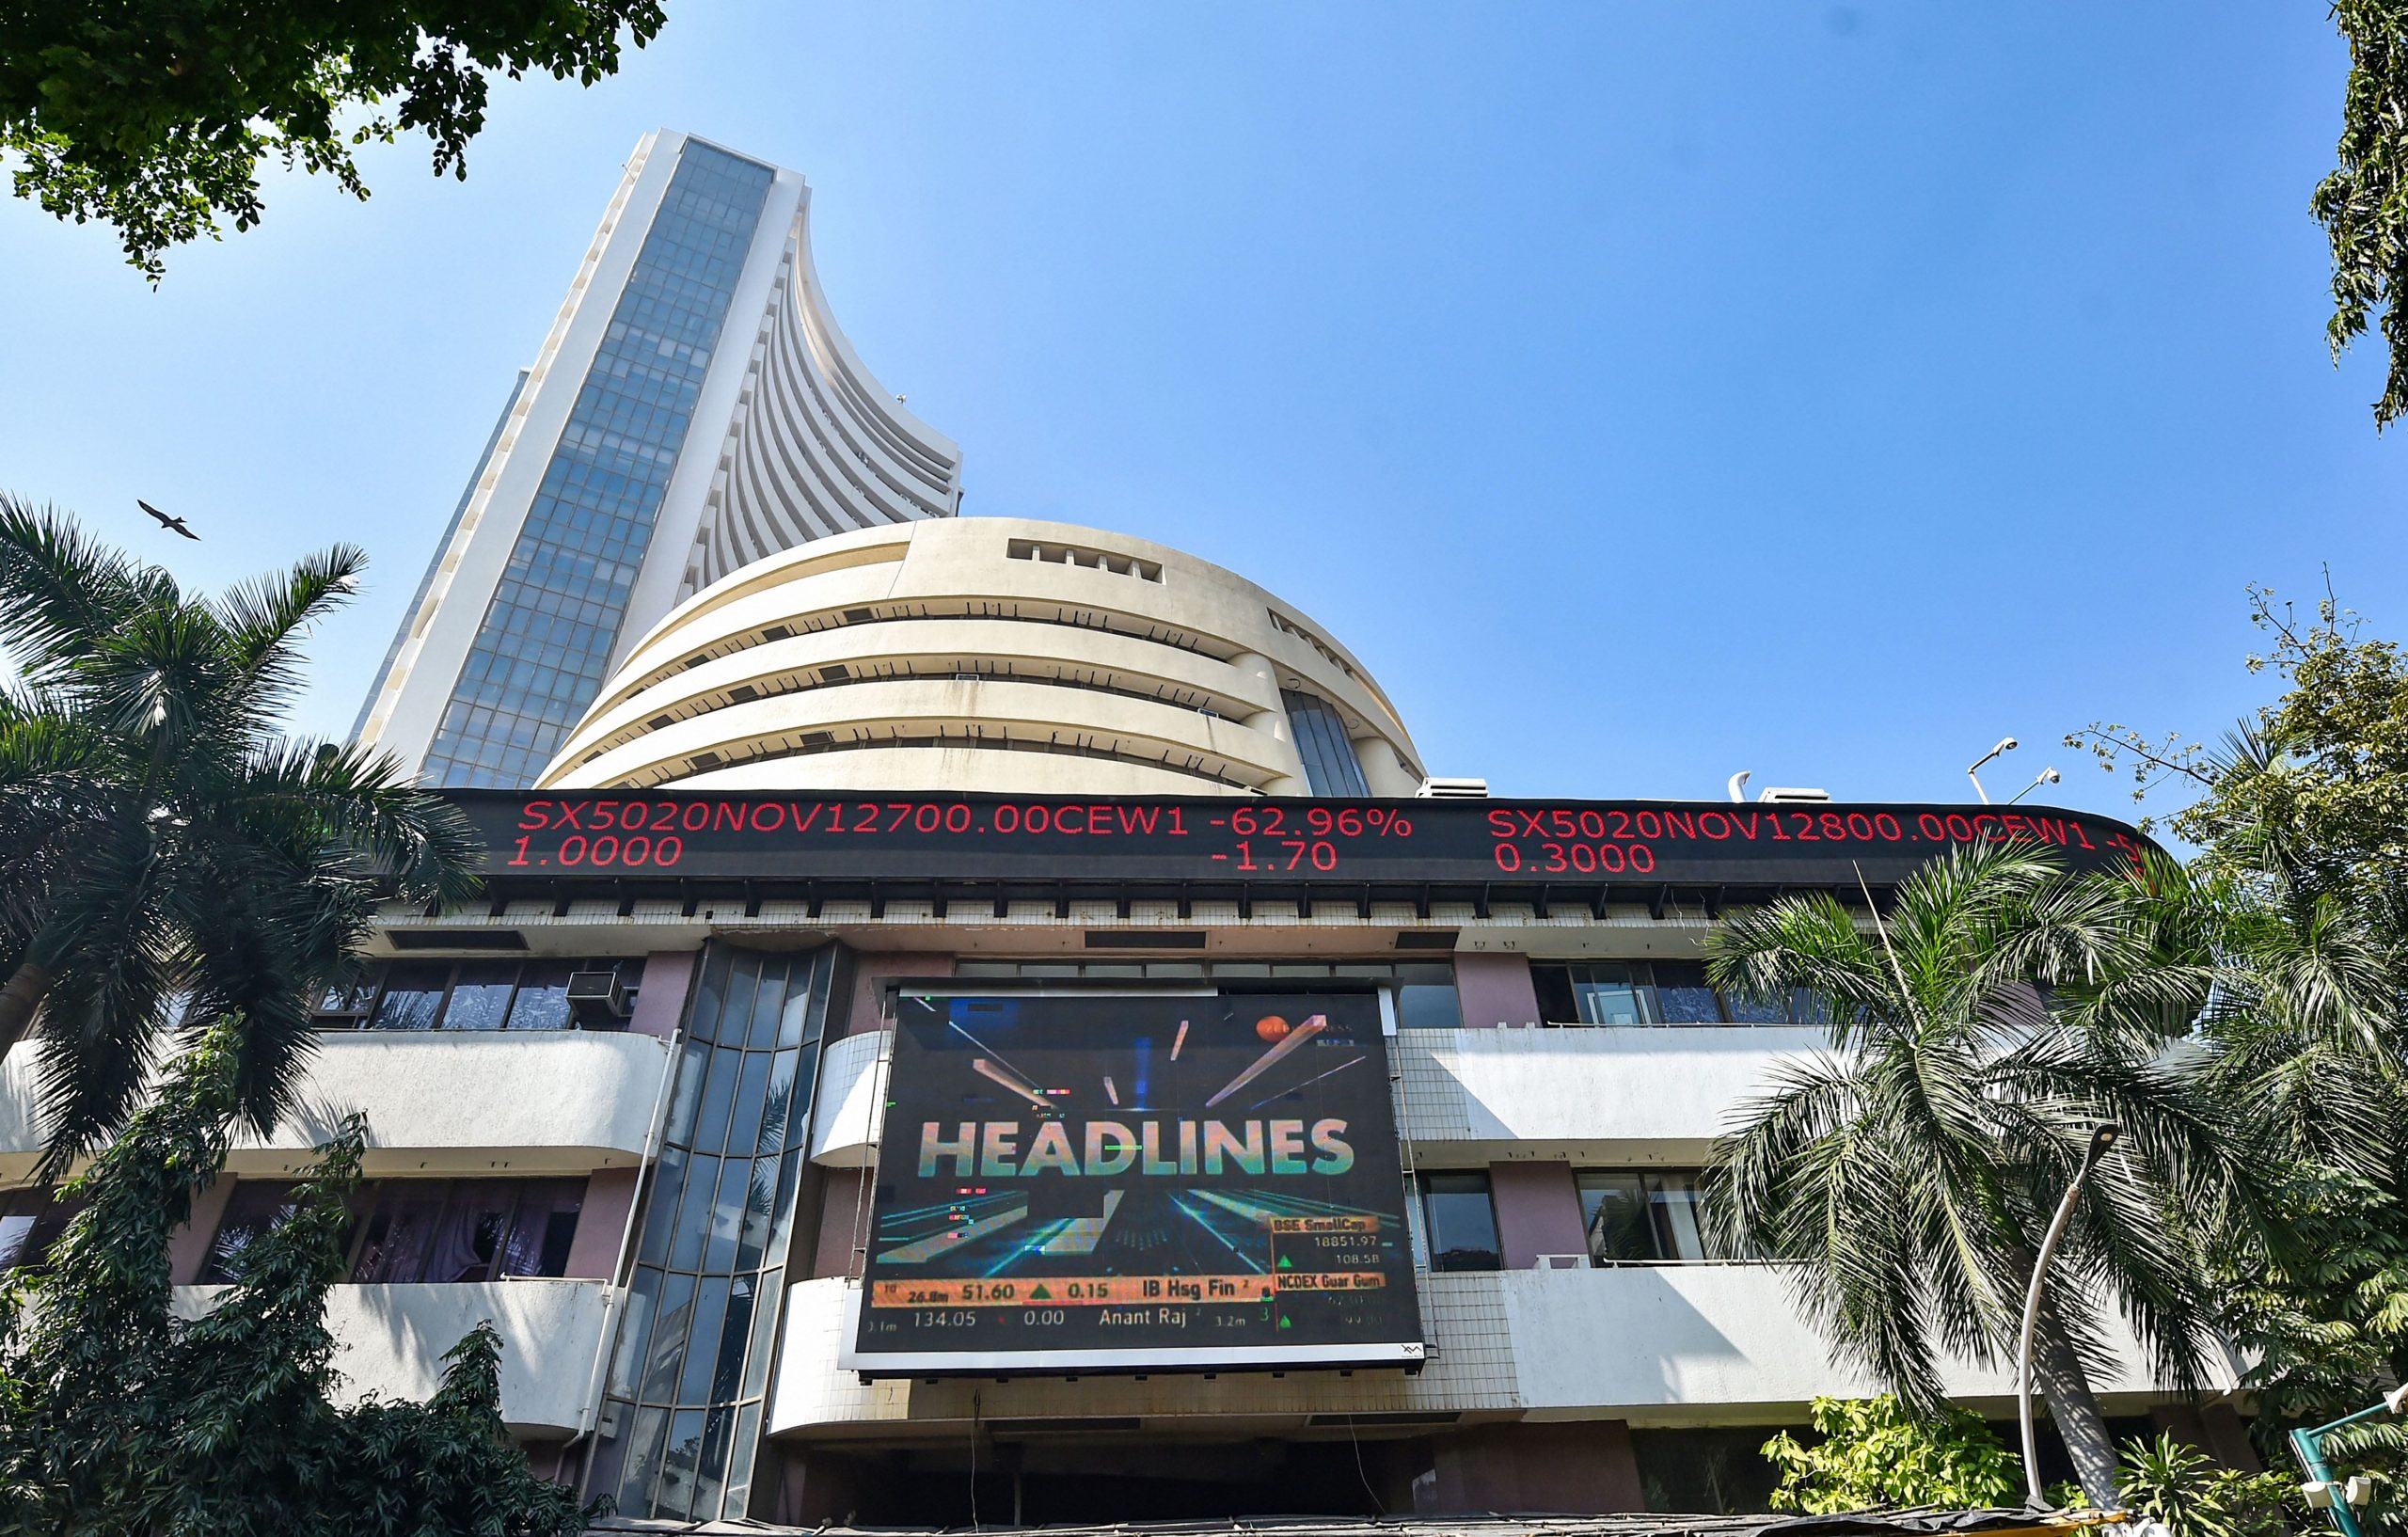 Trending Stocks: Brightcom, Vijaya, Ami organics and others in news today